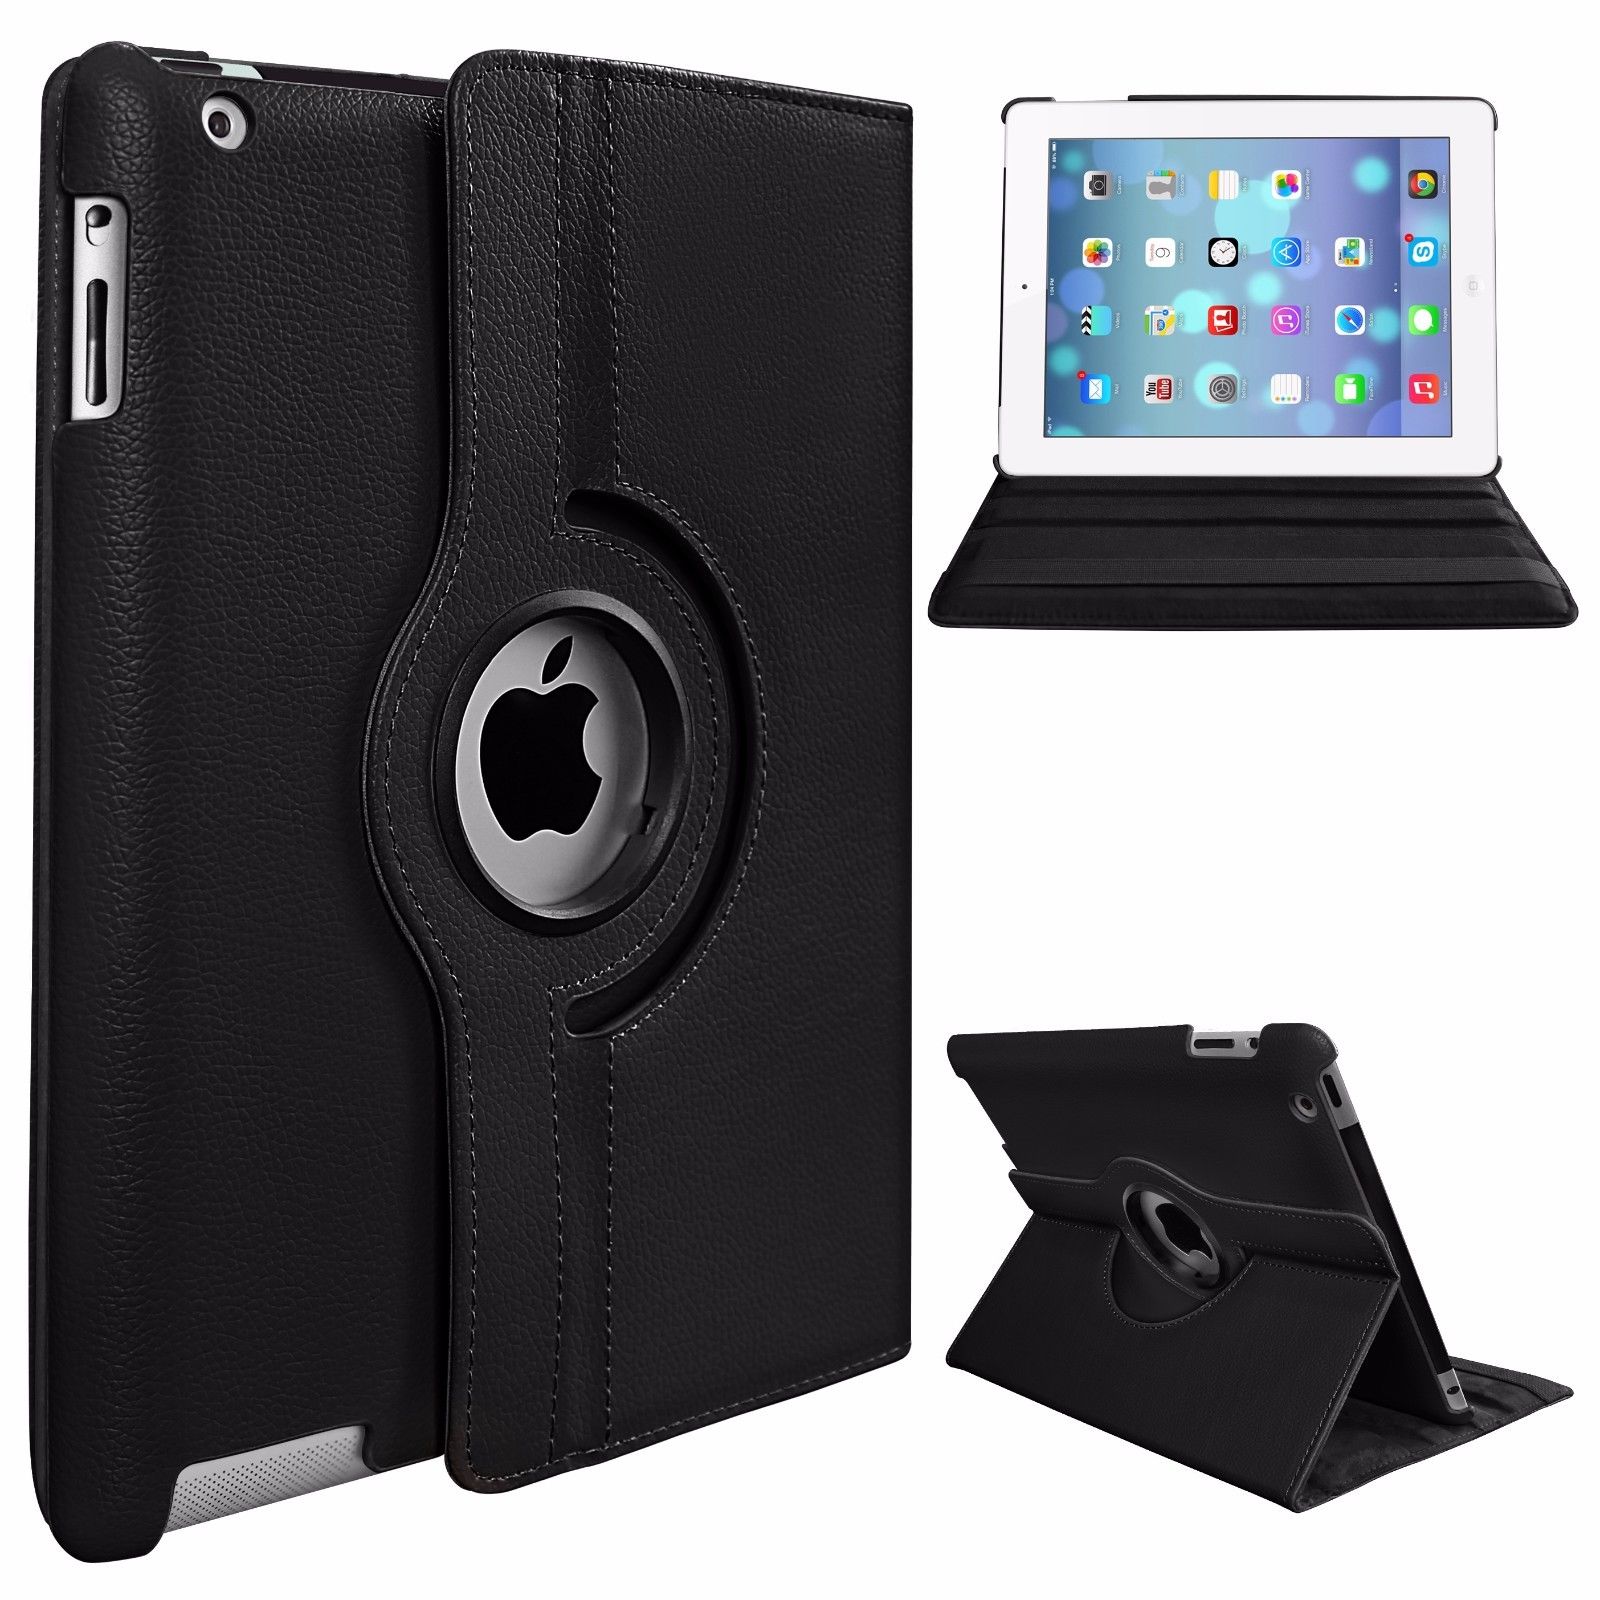 360 Degree Rotating Stand PU Leather Case Cover for Apple iPad2 iPad3 iPad4 - Black